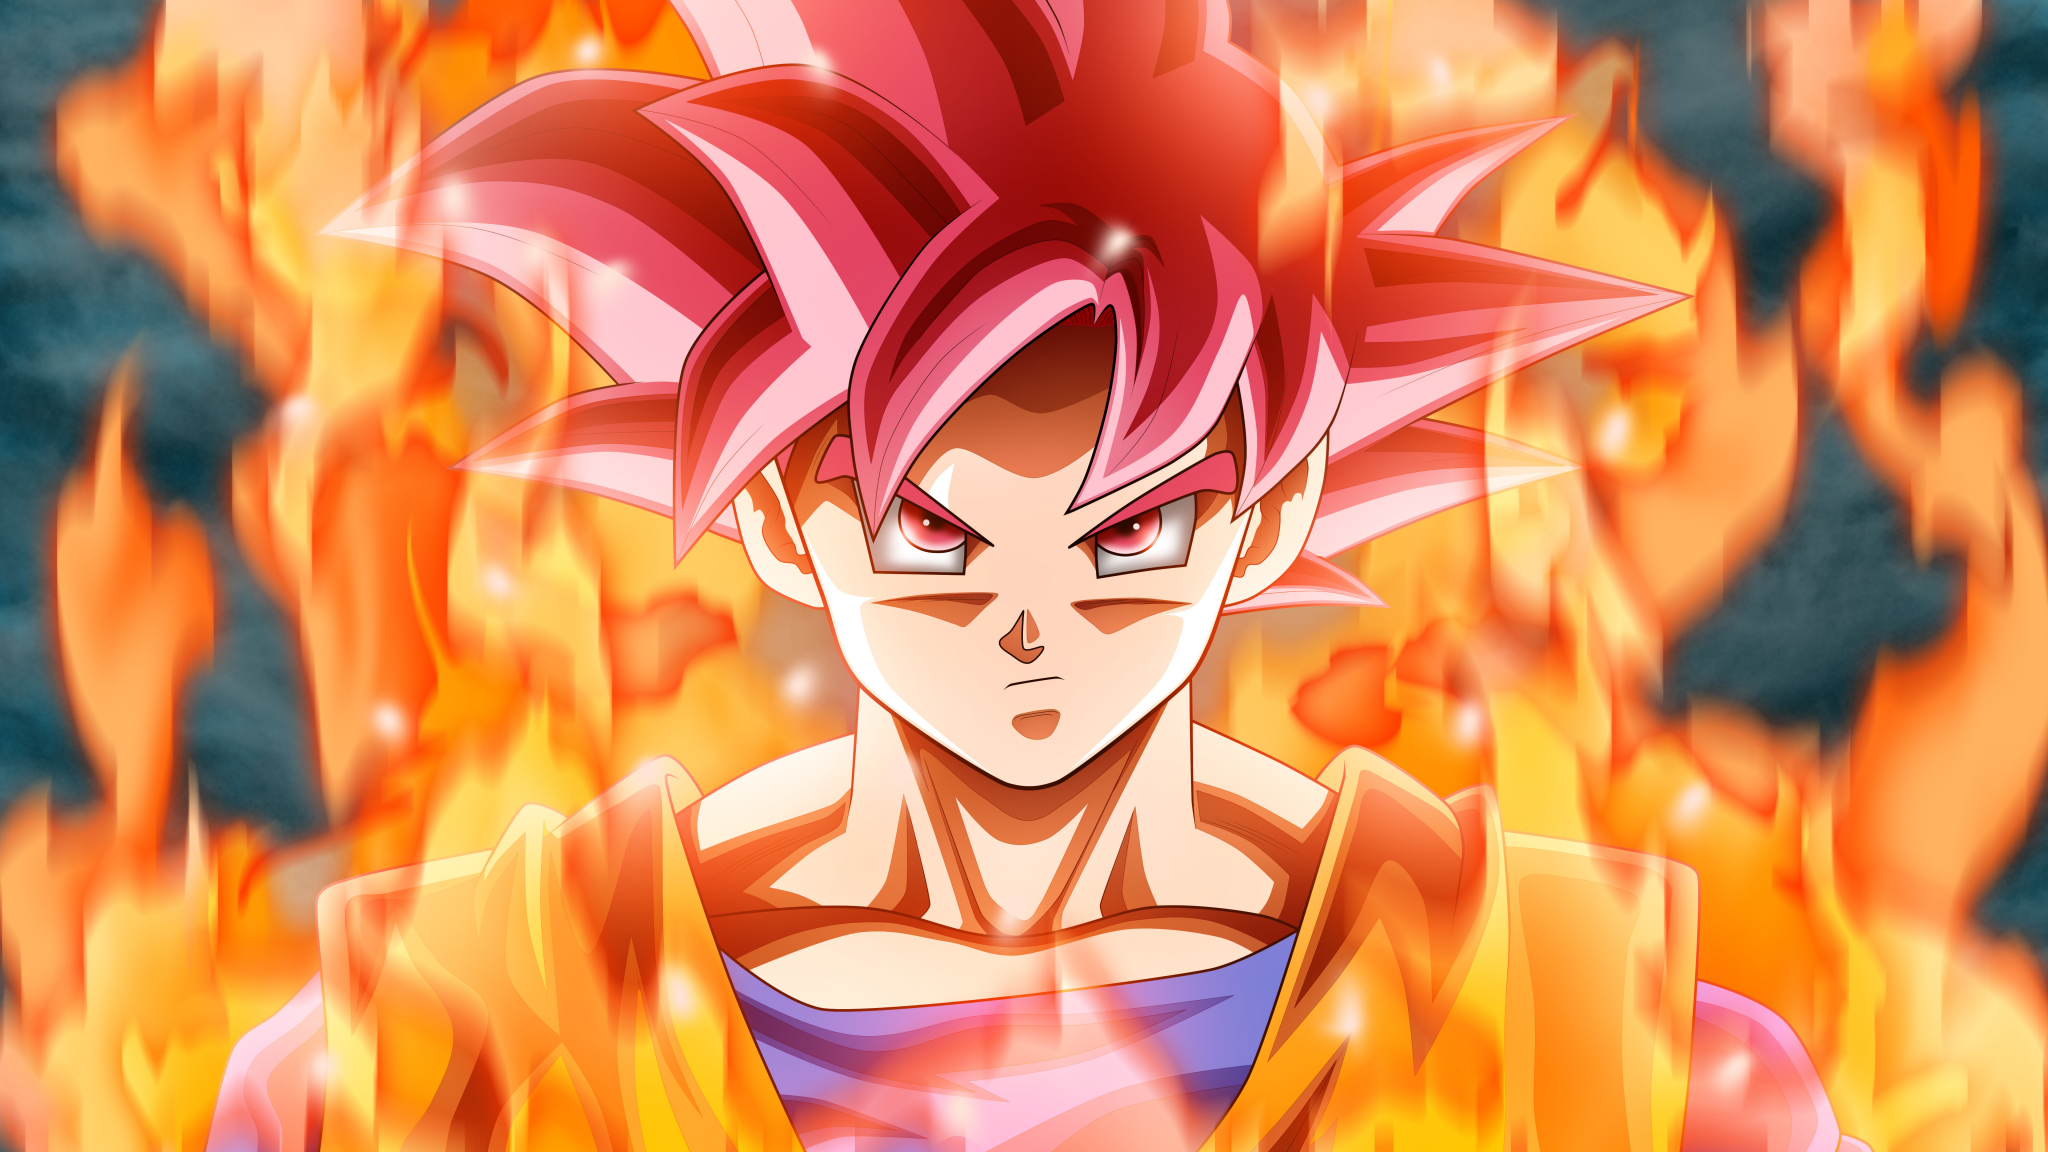 Download Wallpaper 48x1152 Goku Fire Dragon Ball Super Anime Dual Wide 48x1152 Hd Background 1273